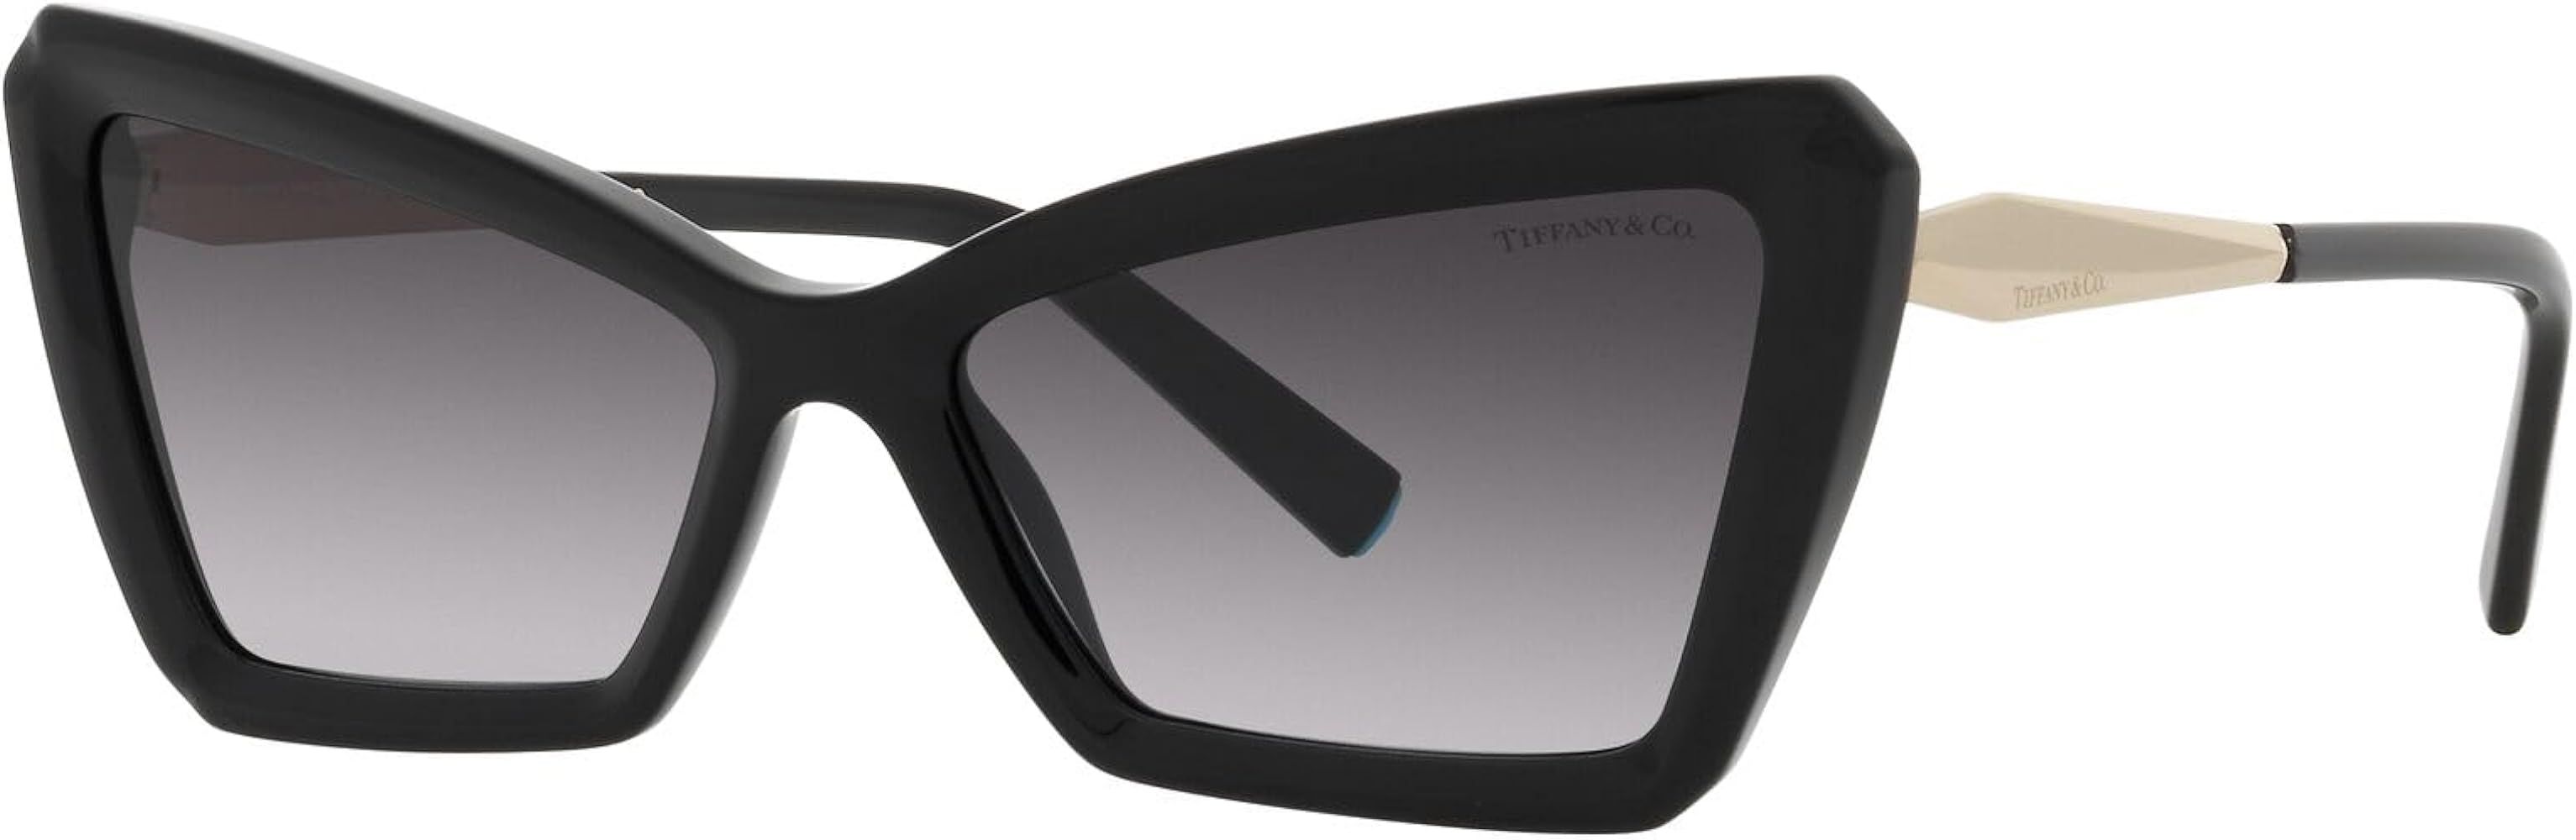 Tiffany & Co. TF 4203 80013C Black Plastic Cat-Eye Sunglasses Grey Gradient Lens | Amazon (US)